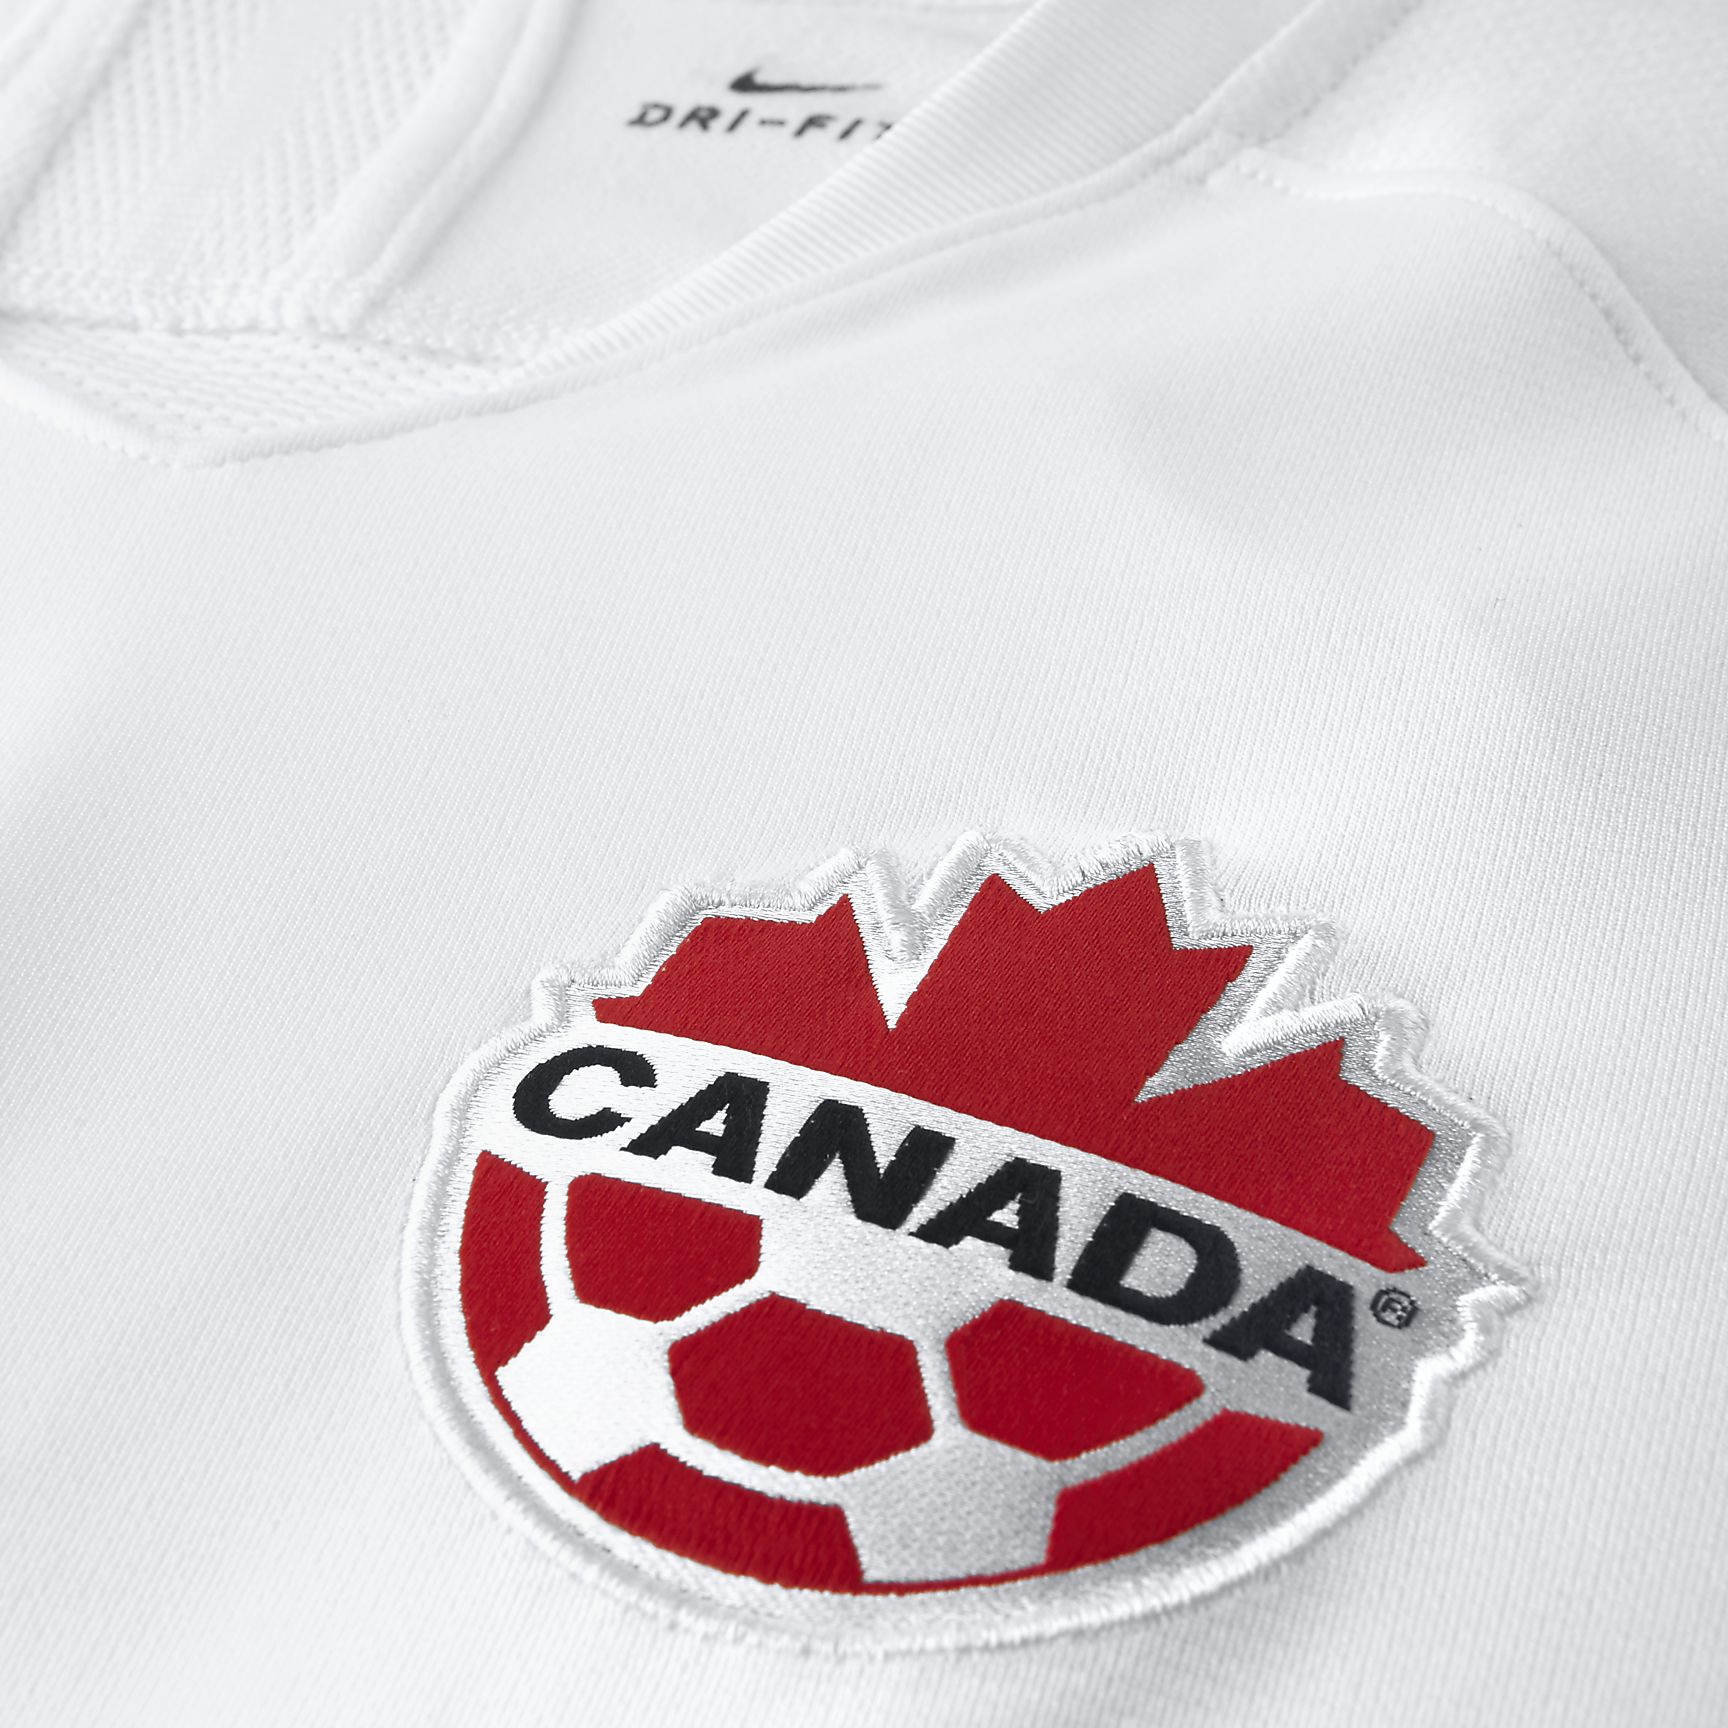 canada soccer jersey 2019 nike